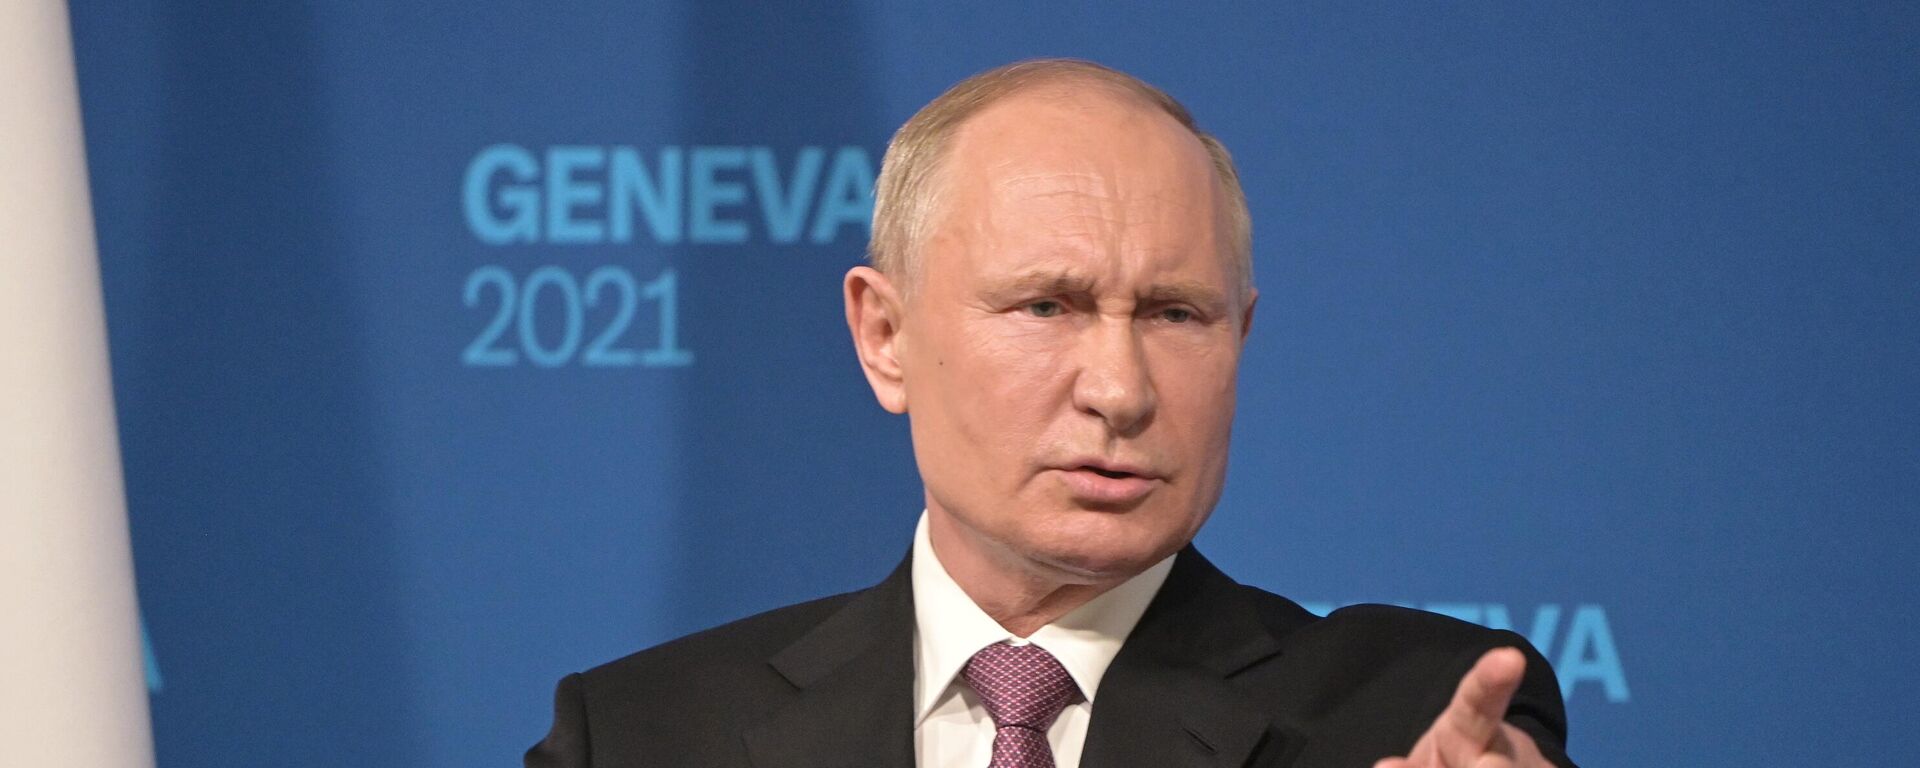 Rusijos prezidentas Vladimiras Putinas - Sputnik Lietuva, 1920, 22.06.2021